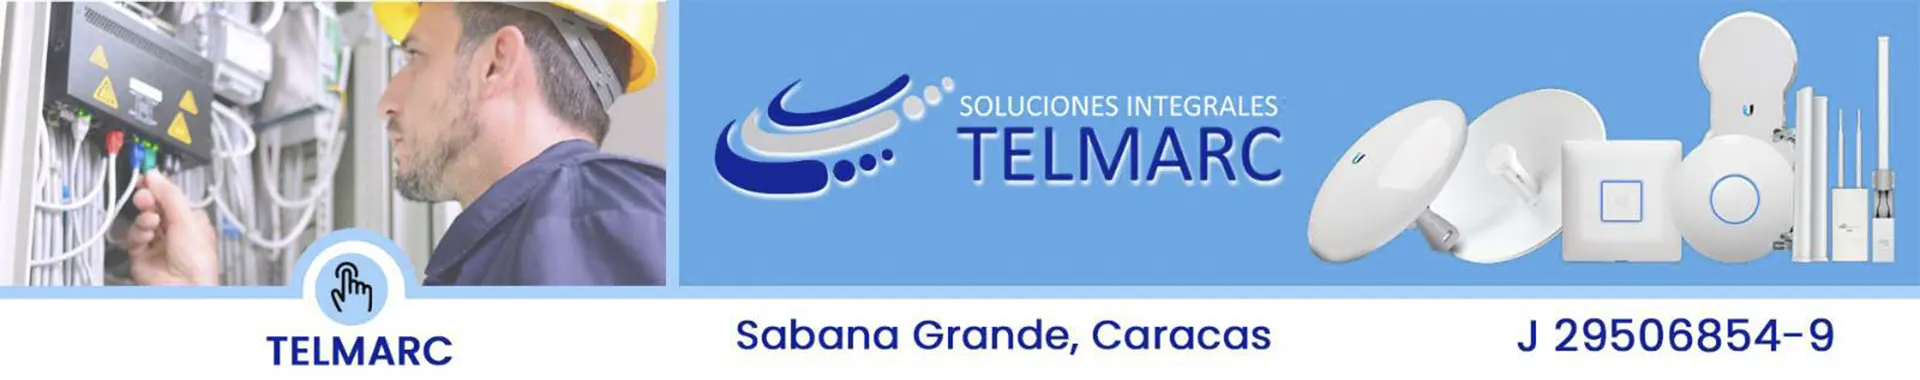 Imagen 3 del perfil de Telmarc